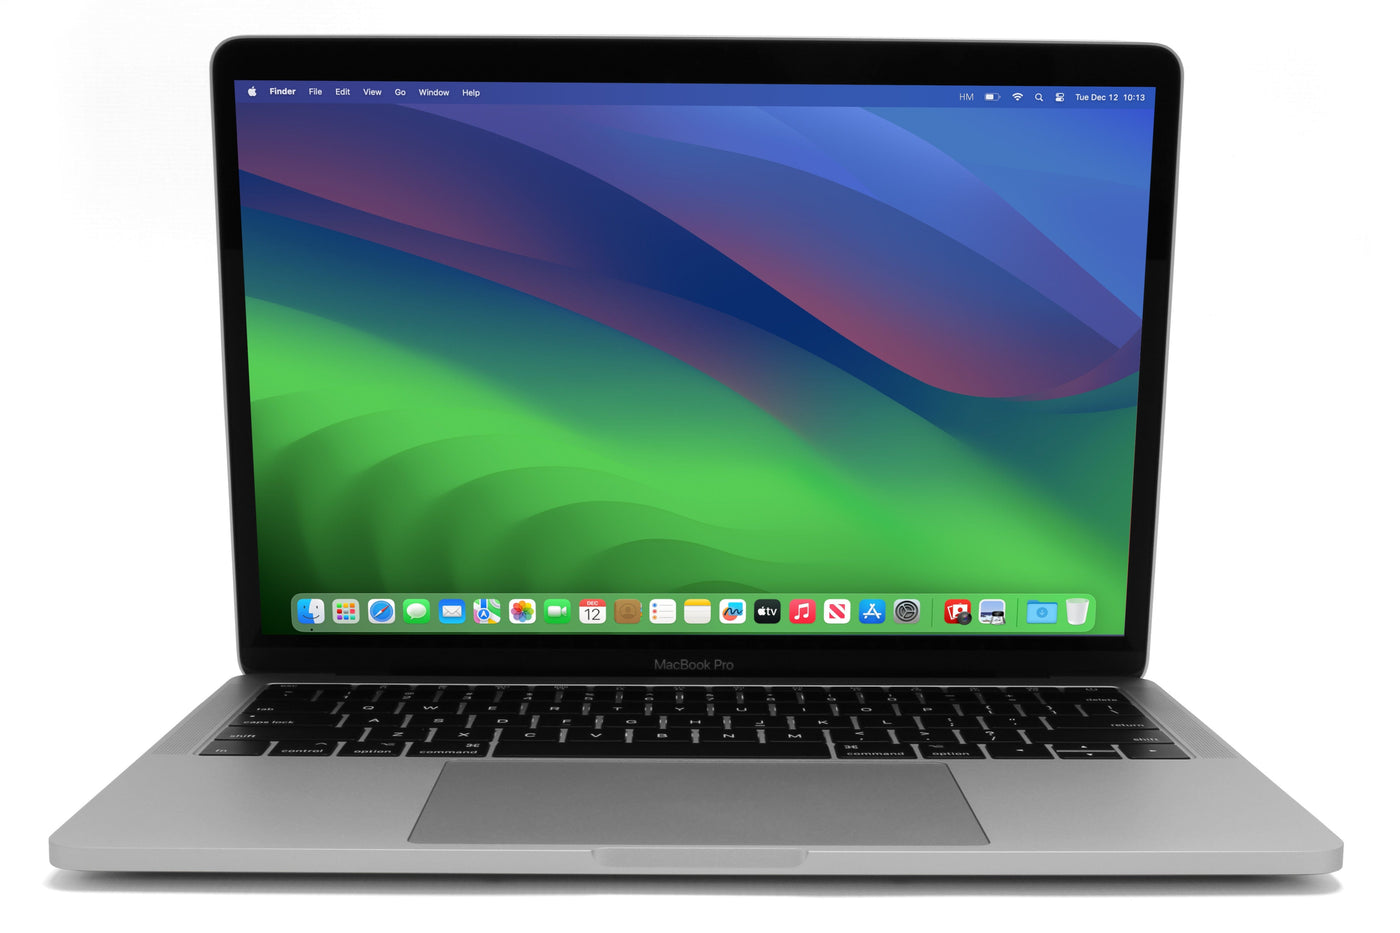 Apple MacBook Pro 13-inch MacBook Pro 13-inch Core i7 1.7GHz (Silver, 2019) - Excellent